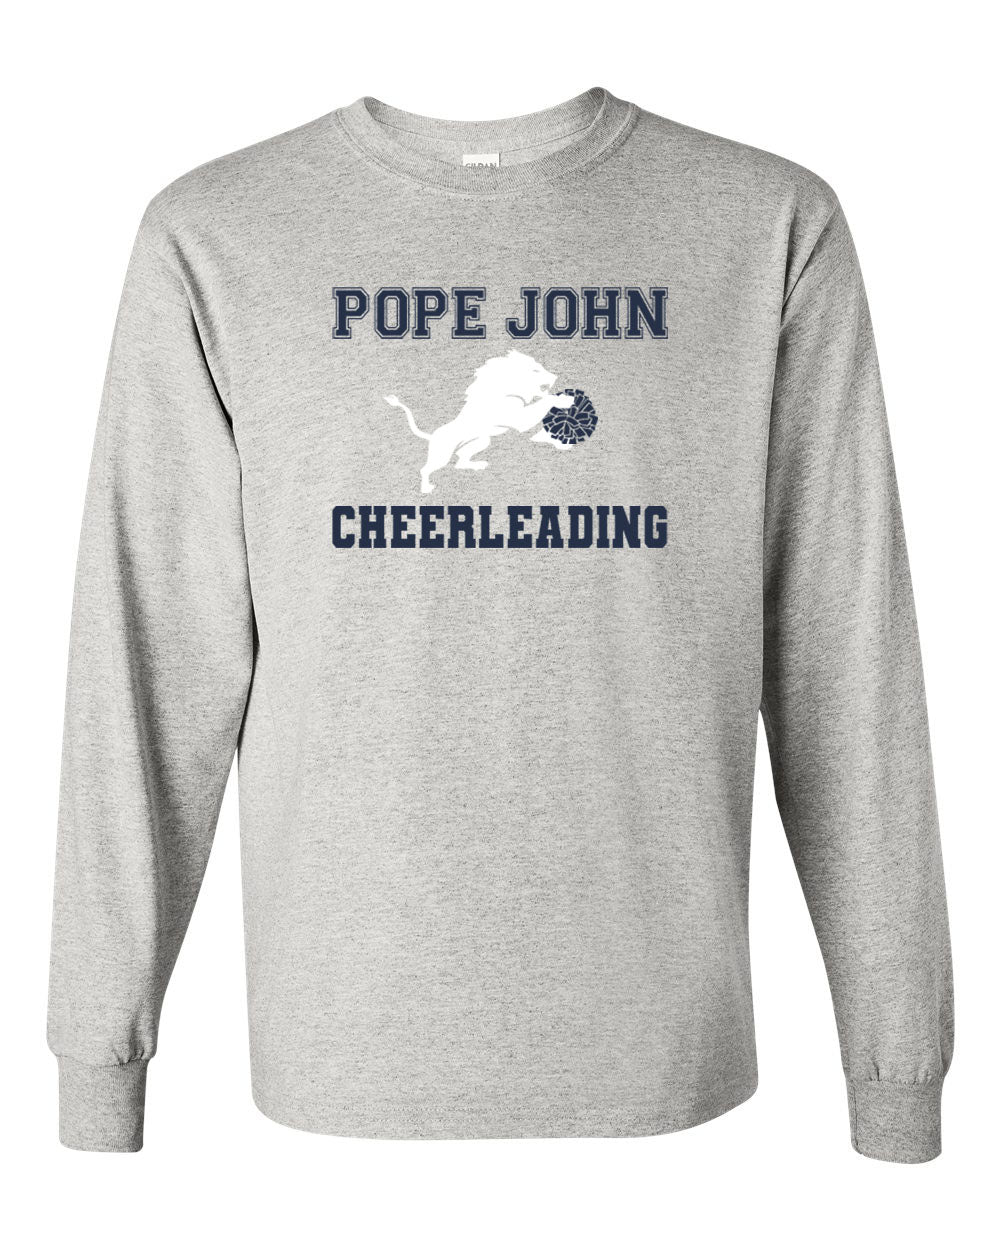 Pope John Cheer Design 1 Long Sleeve Shirt